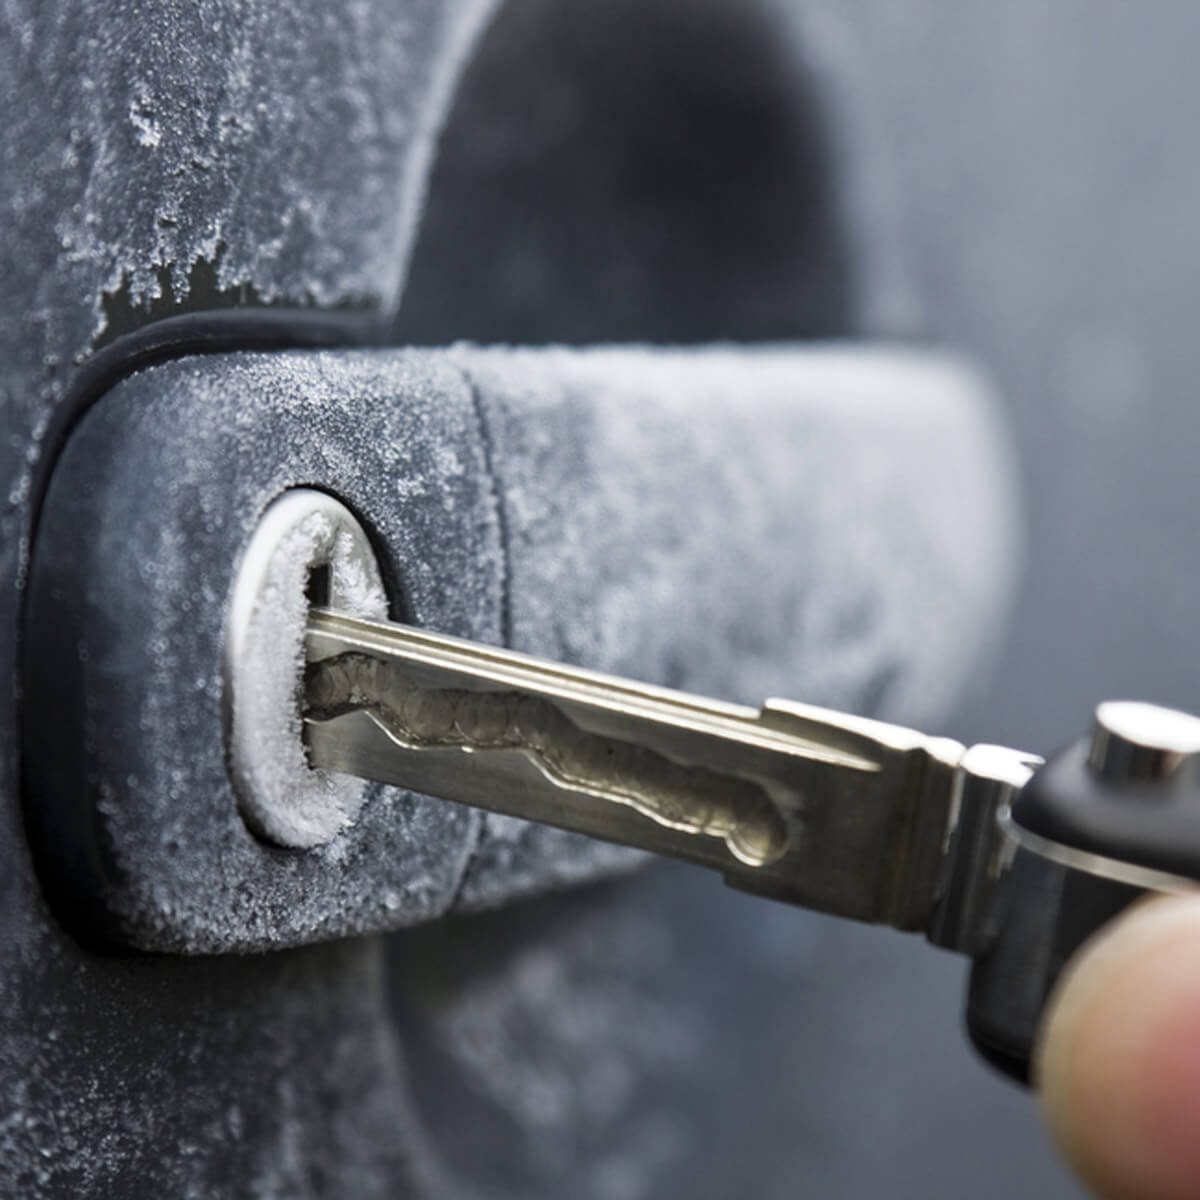 Key Stuck in Lock? Here Are 3 Easy Ways to Remove It - Bob Vila